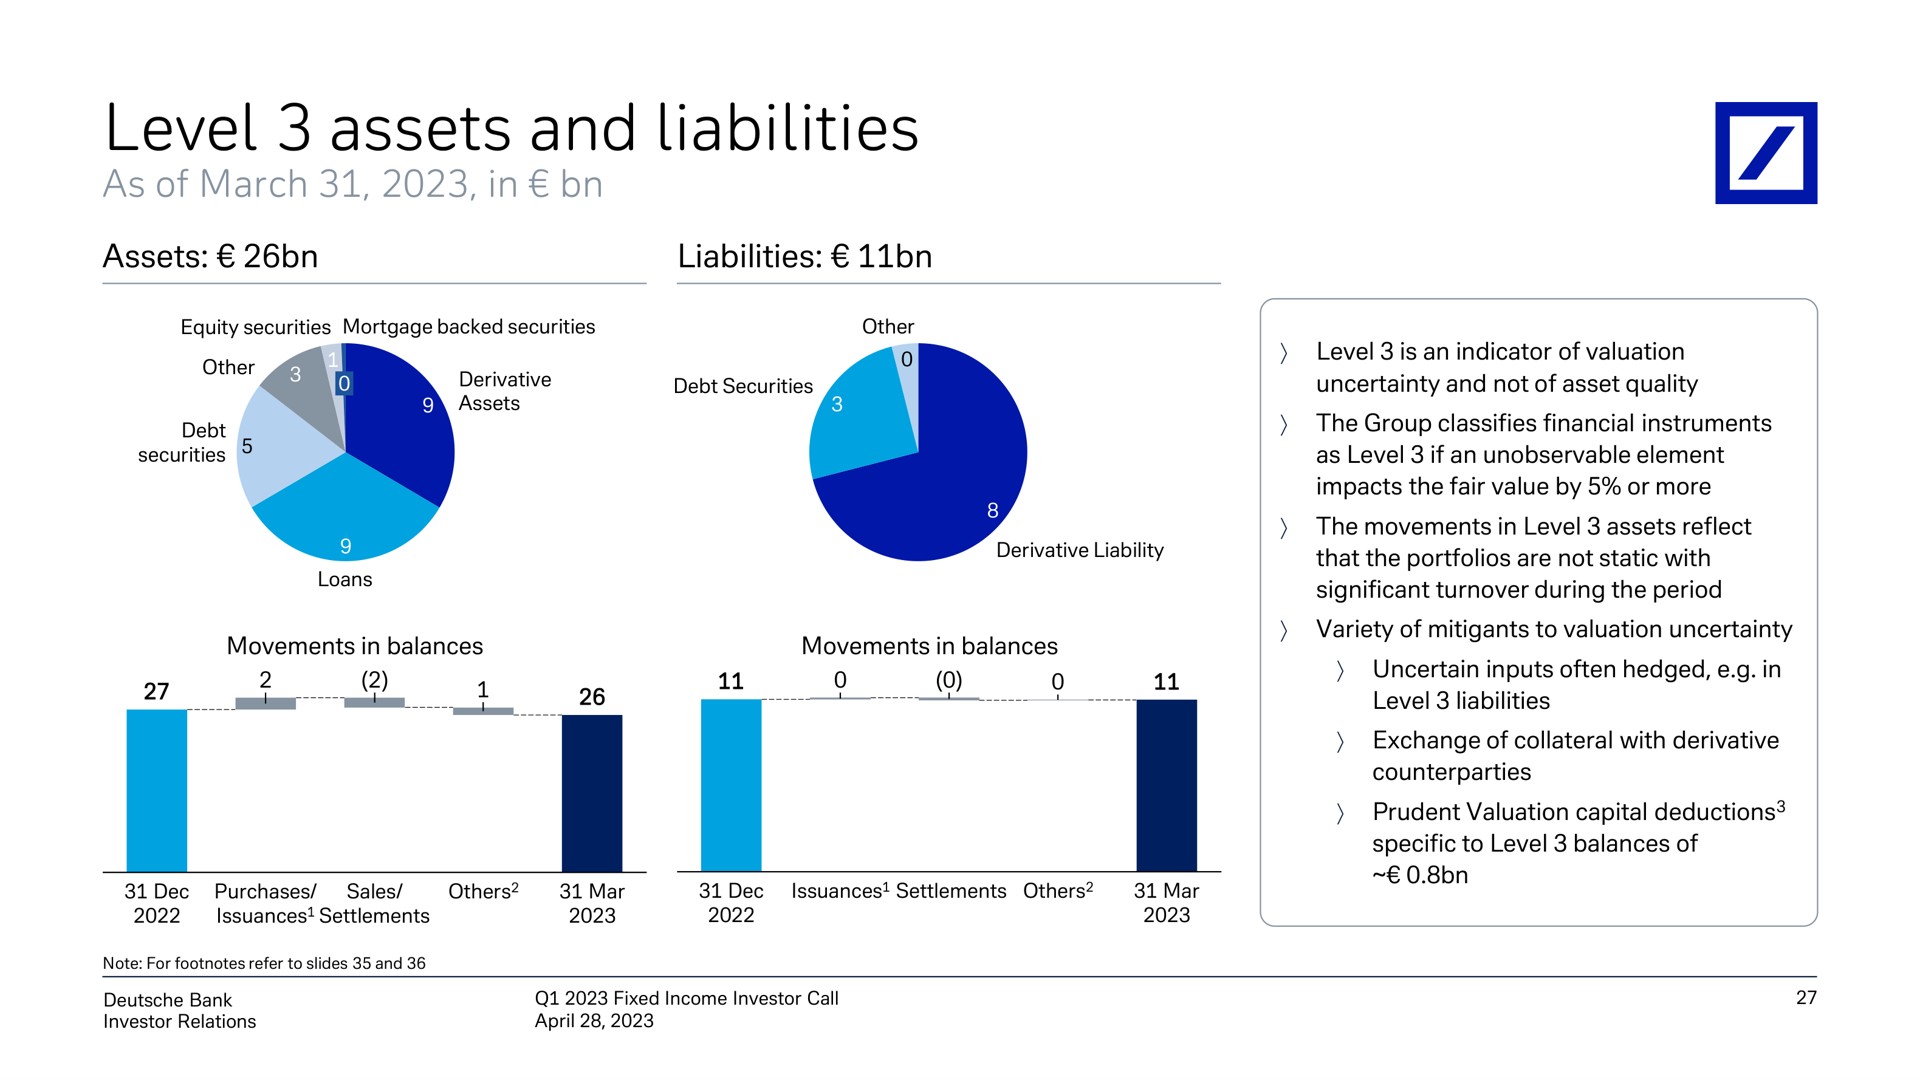 level assets and liabilities | Deutsche Bank